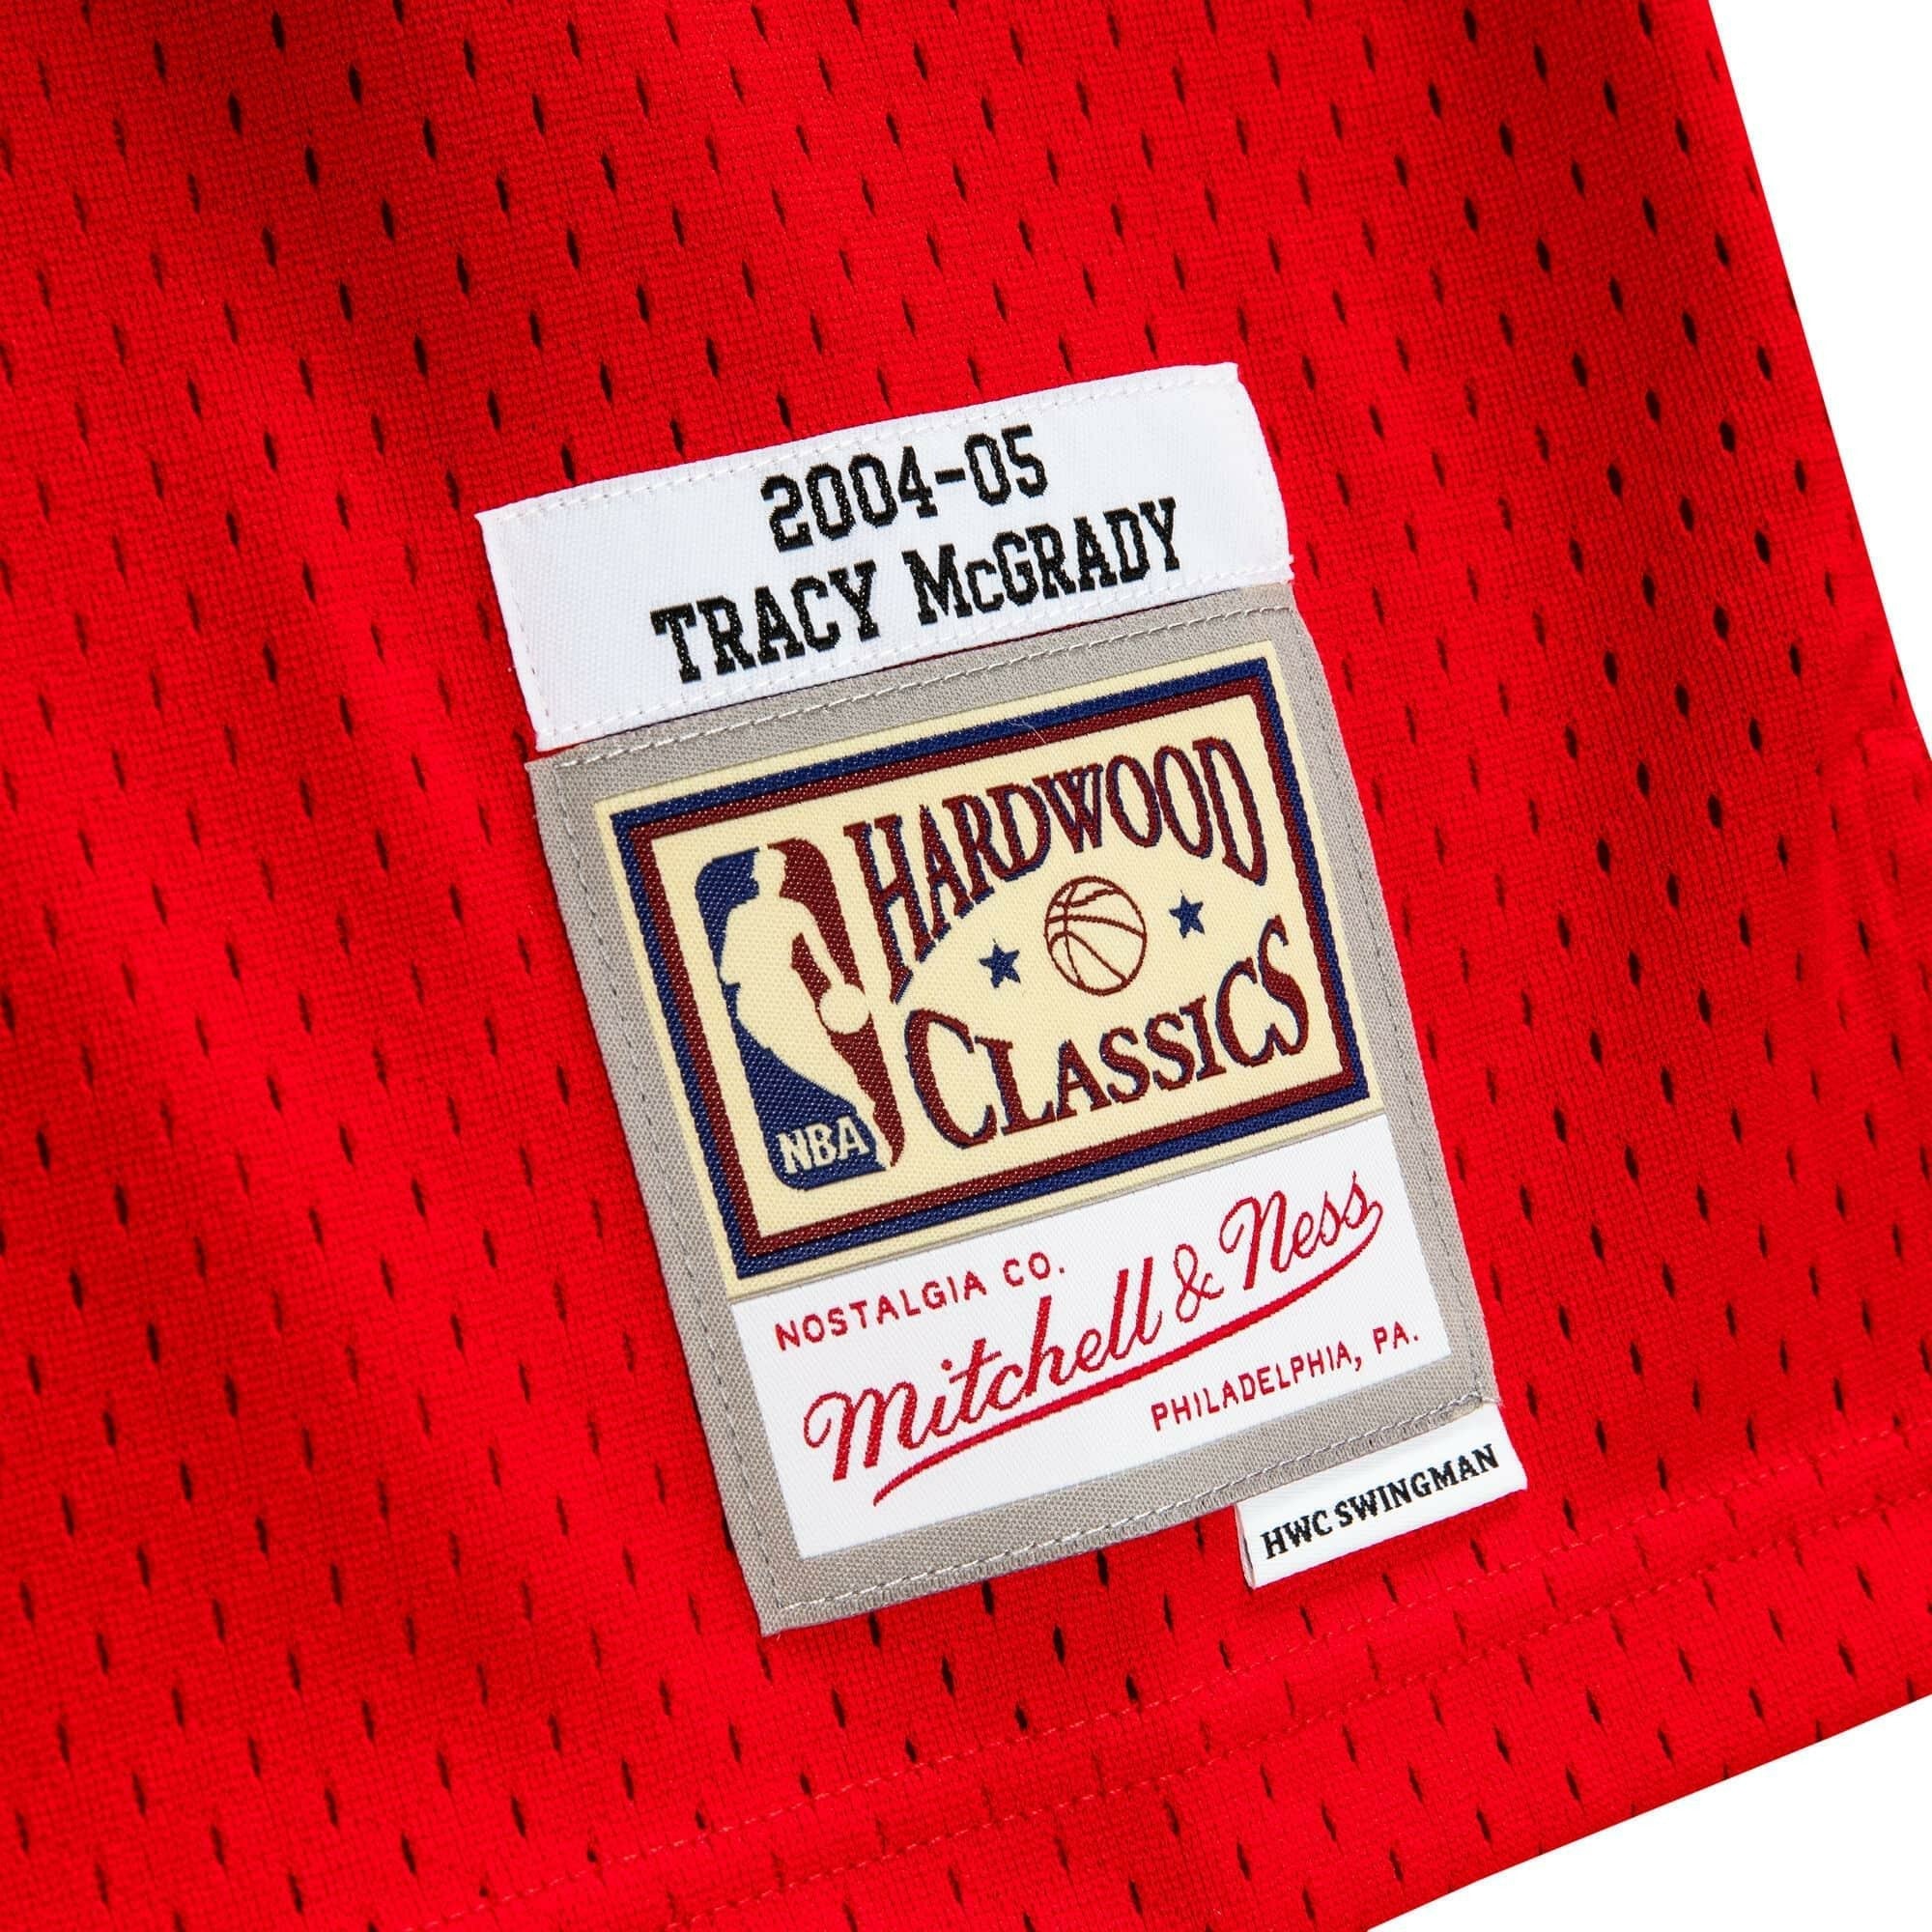 Mitchell & Ness - Tracy McGrady 1, Houston Rockets 04-05 Road NBA Swingman Jersey 